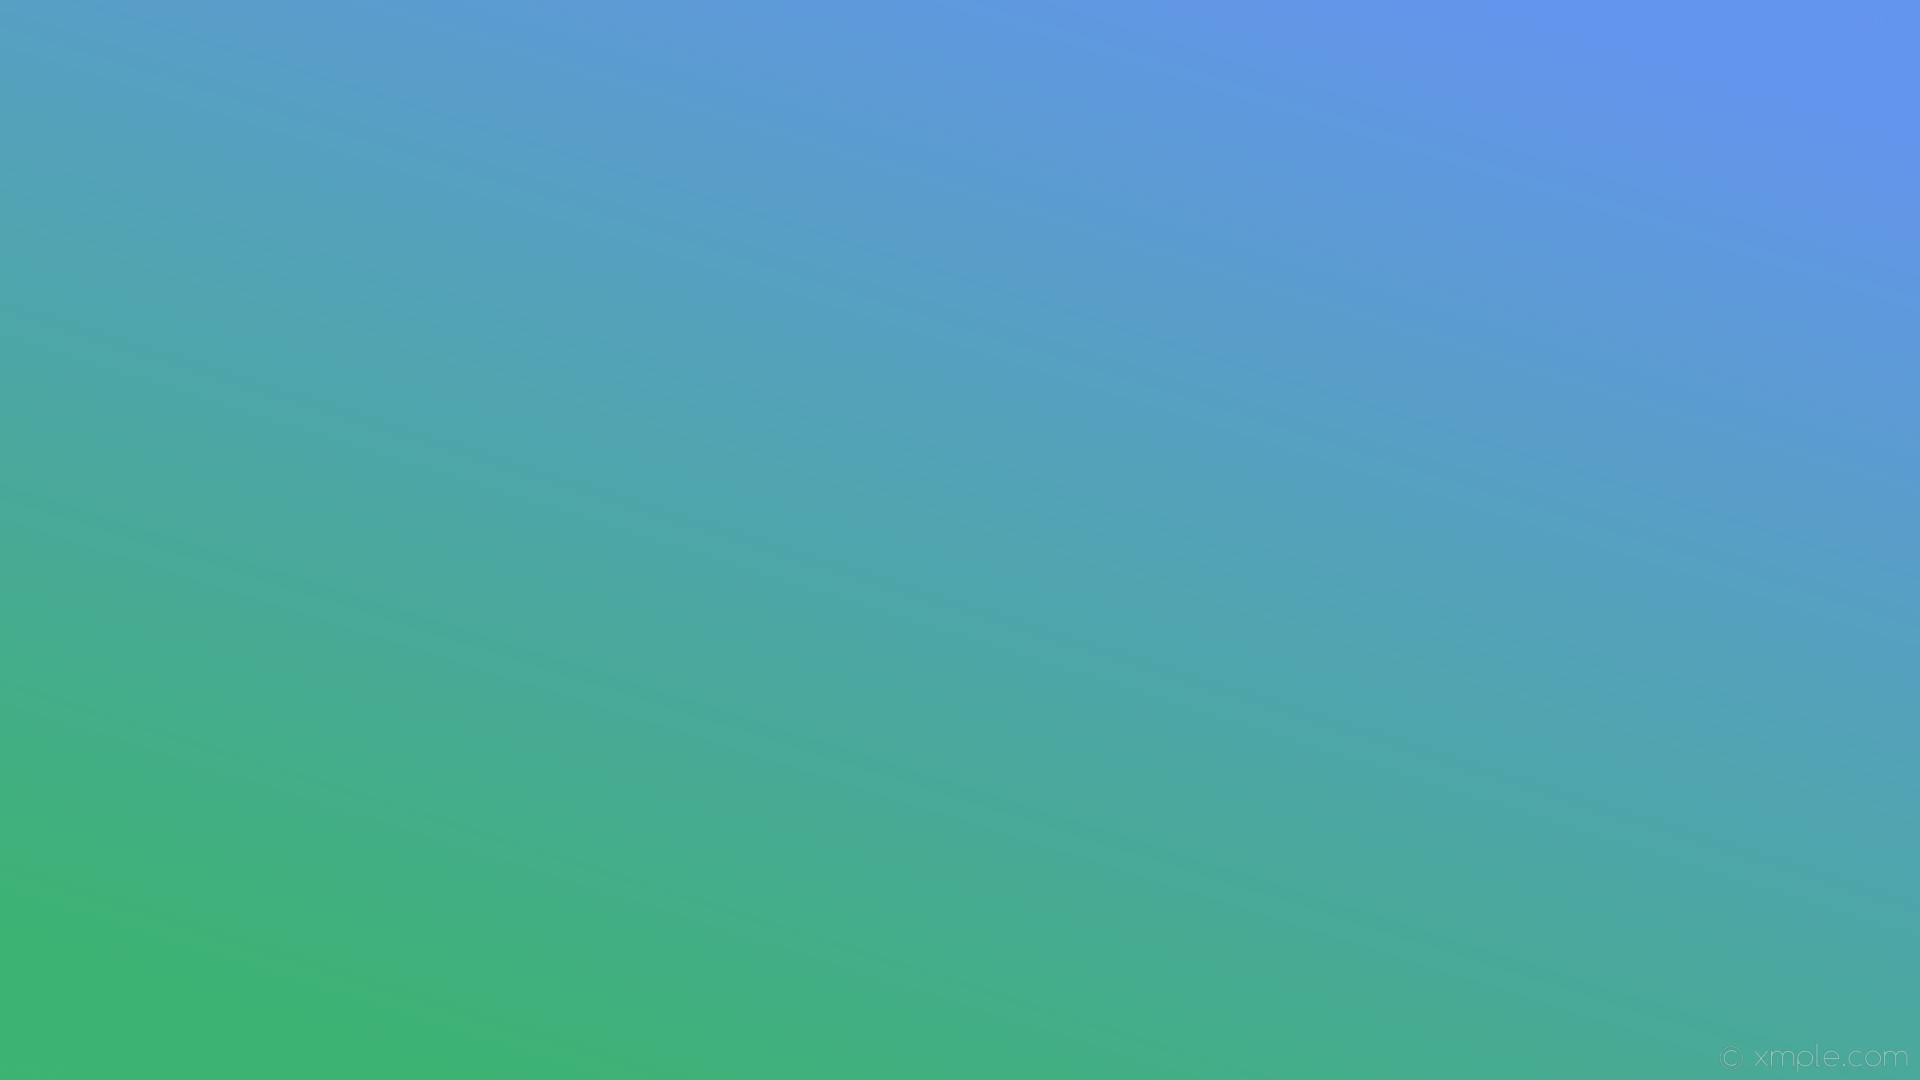 1920x1080 wallpaper linear green blue gradient cornflower blue medium sea green  #6495ed #3cb371 45Â°